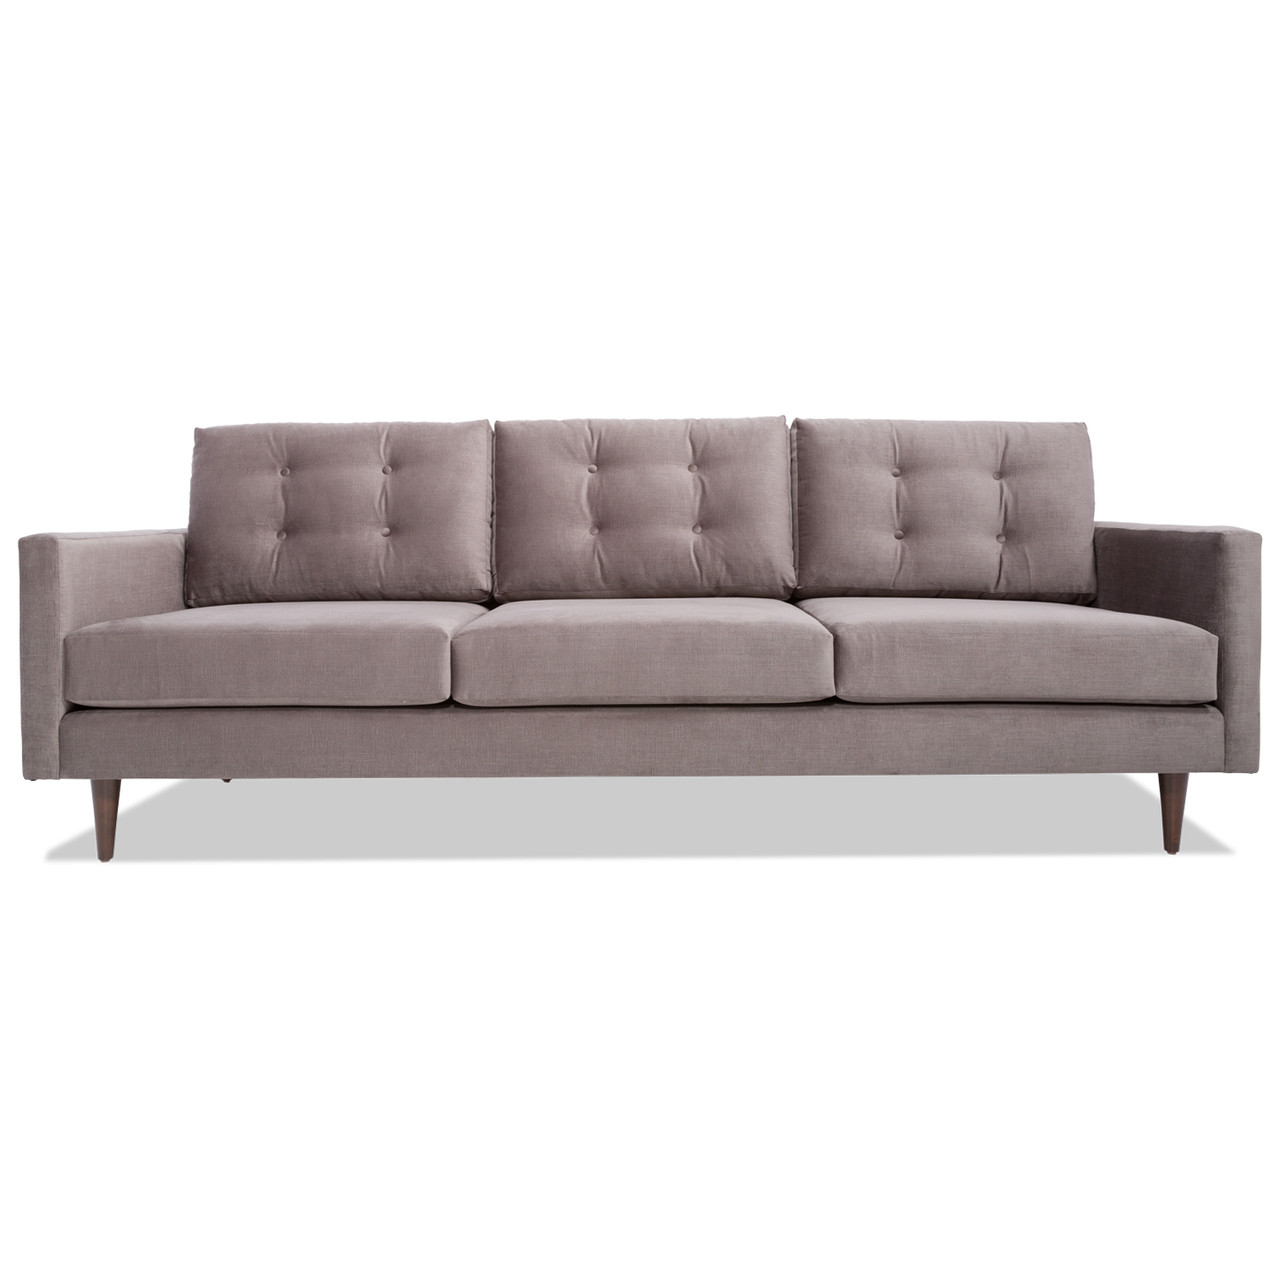 Best ideas about Mid Century Modern Sleeper Sofa
. Save or Pin Danish Modern Sleeper Sofa Danish Mid Century Modern Back Now.